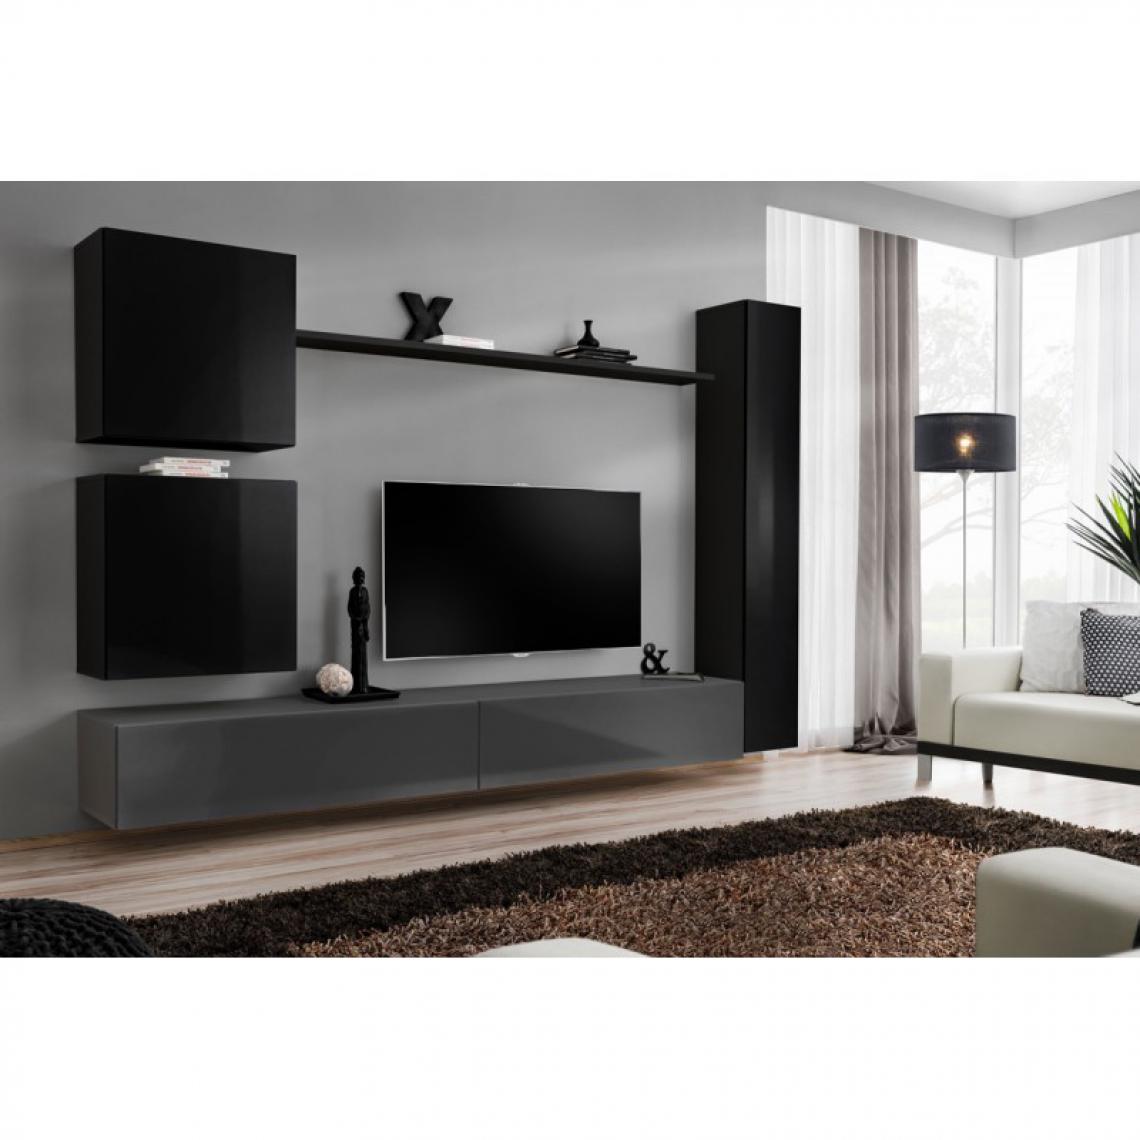 Ac-Deco - Meuble TV Mural Design Switch VIII 280cm Noir & Gris - Meubles TV, Hi-Fi